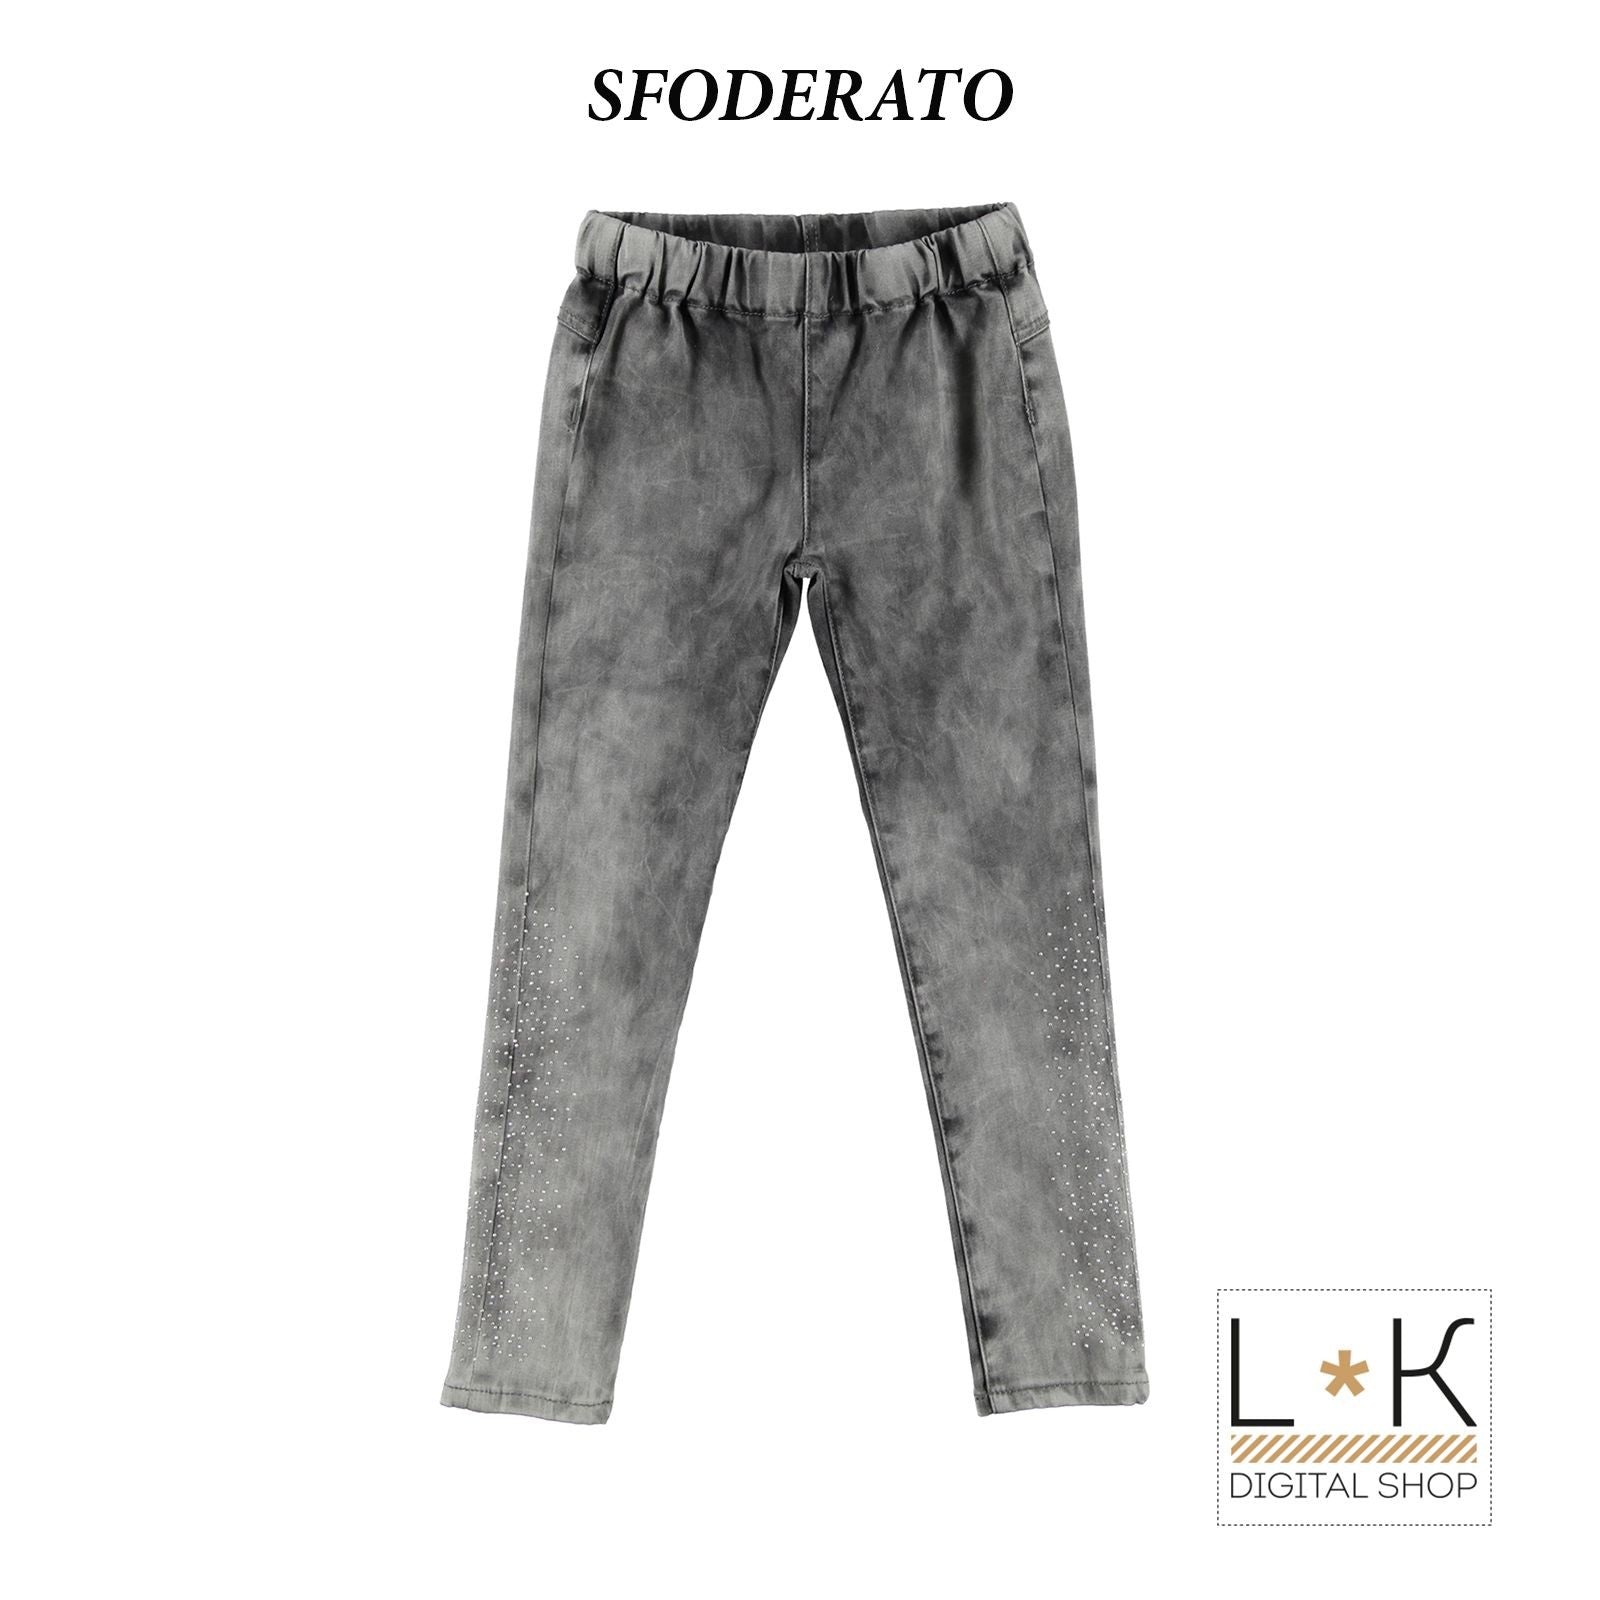 Pantalone Slim Fit Effetto Jensato con Stampa Grigio Bambina Sarabanda L467 - SARABANDA - LuxuryKids